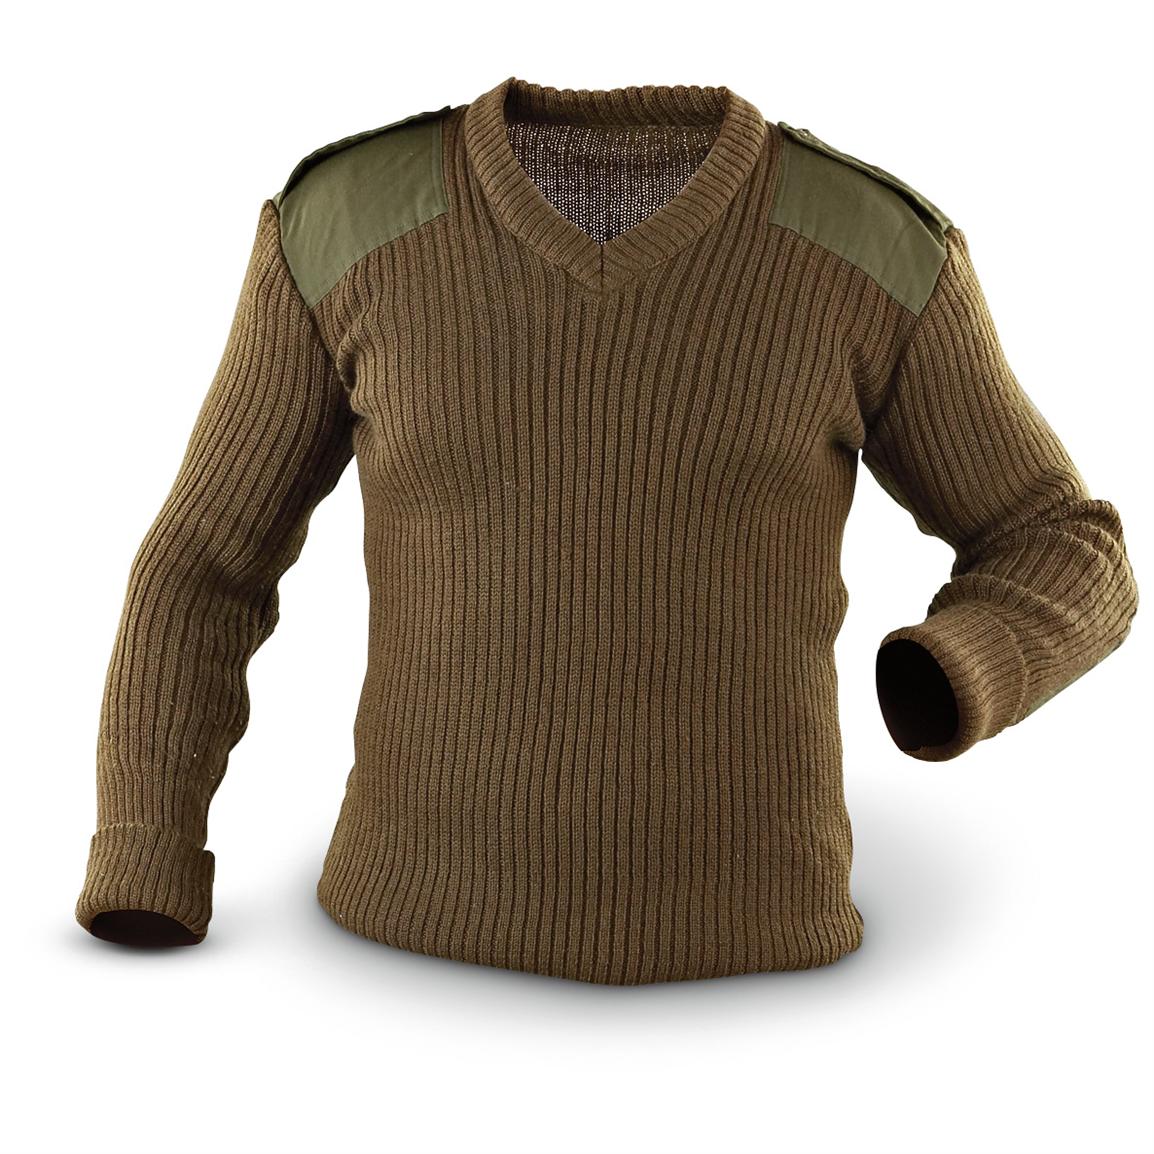 New Israeli Military surplus - issue Commando Wool Sweater, Olive Drab ...